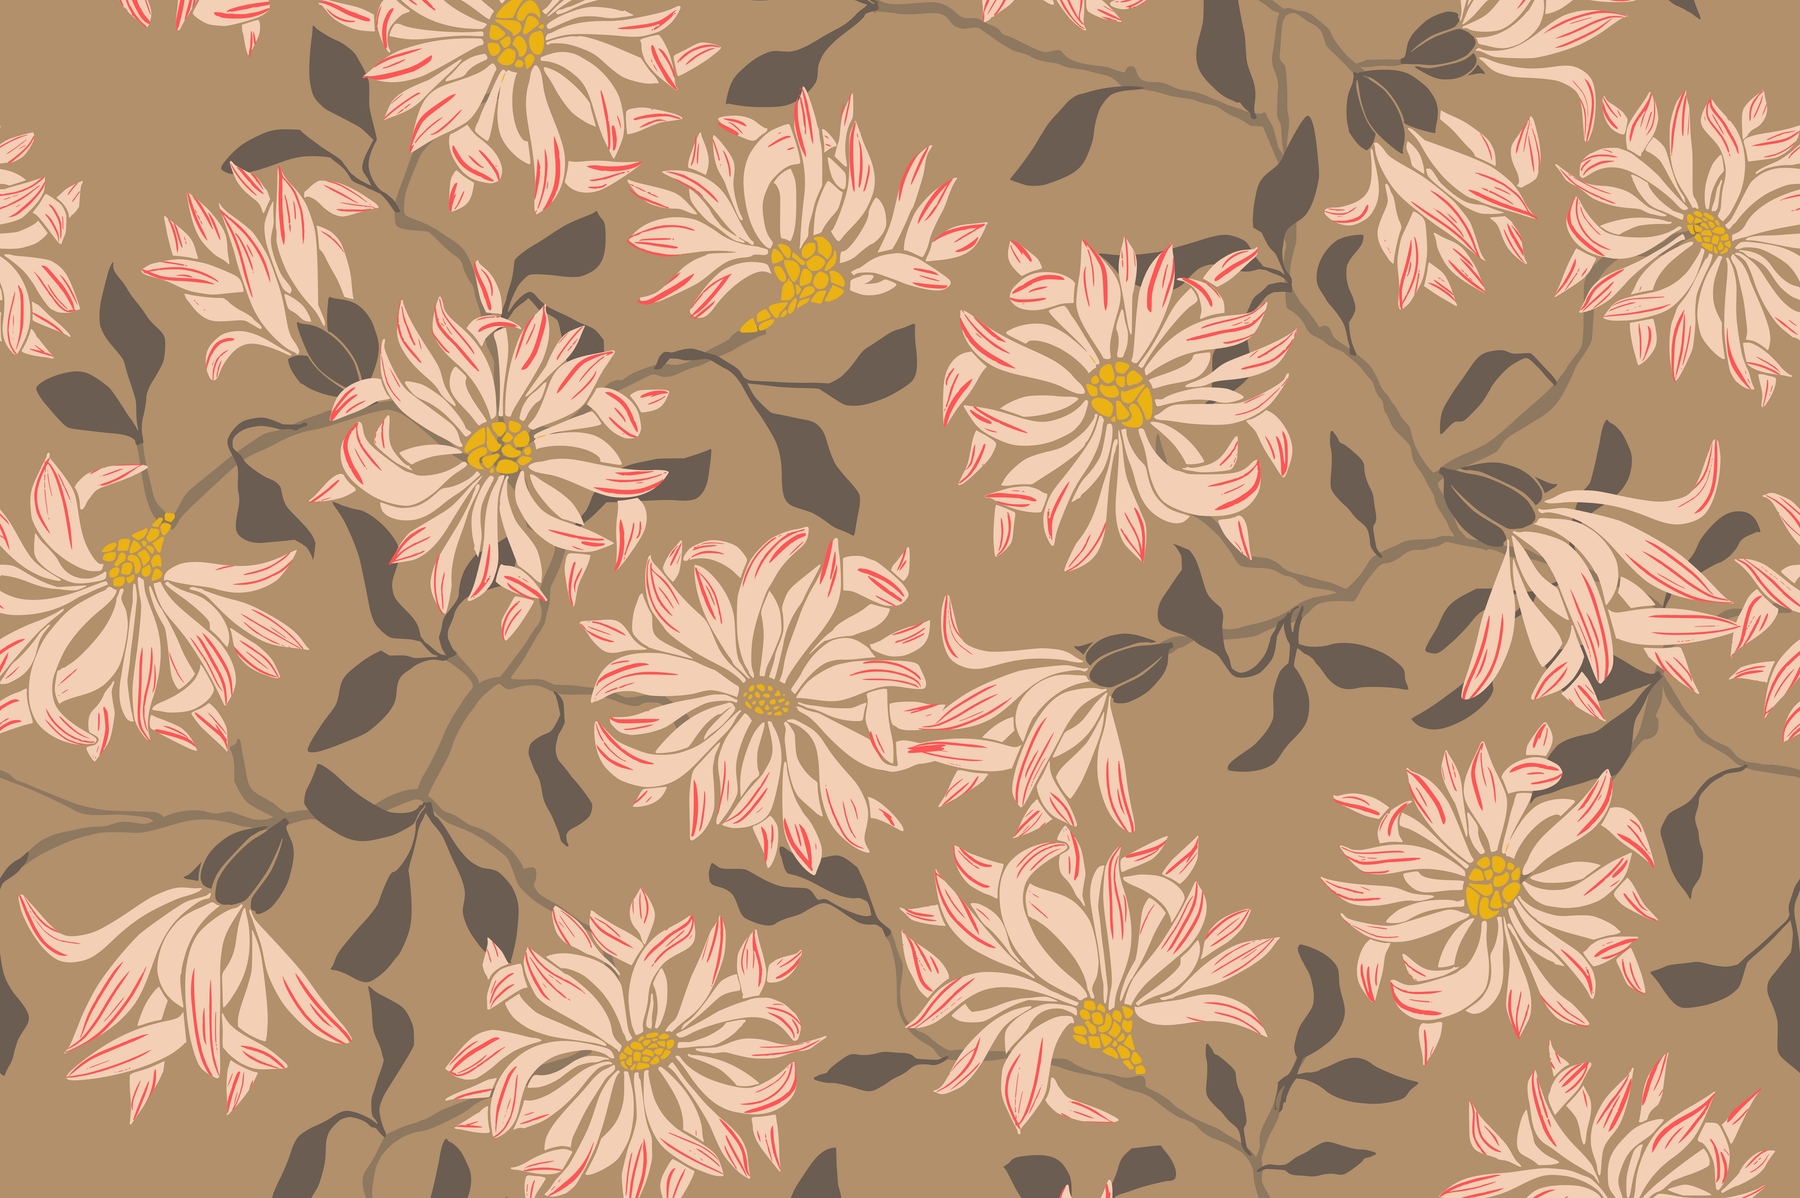 Aesthetic Brown Flowers Wallpapers - Wallpaper Cave